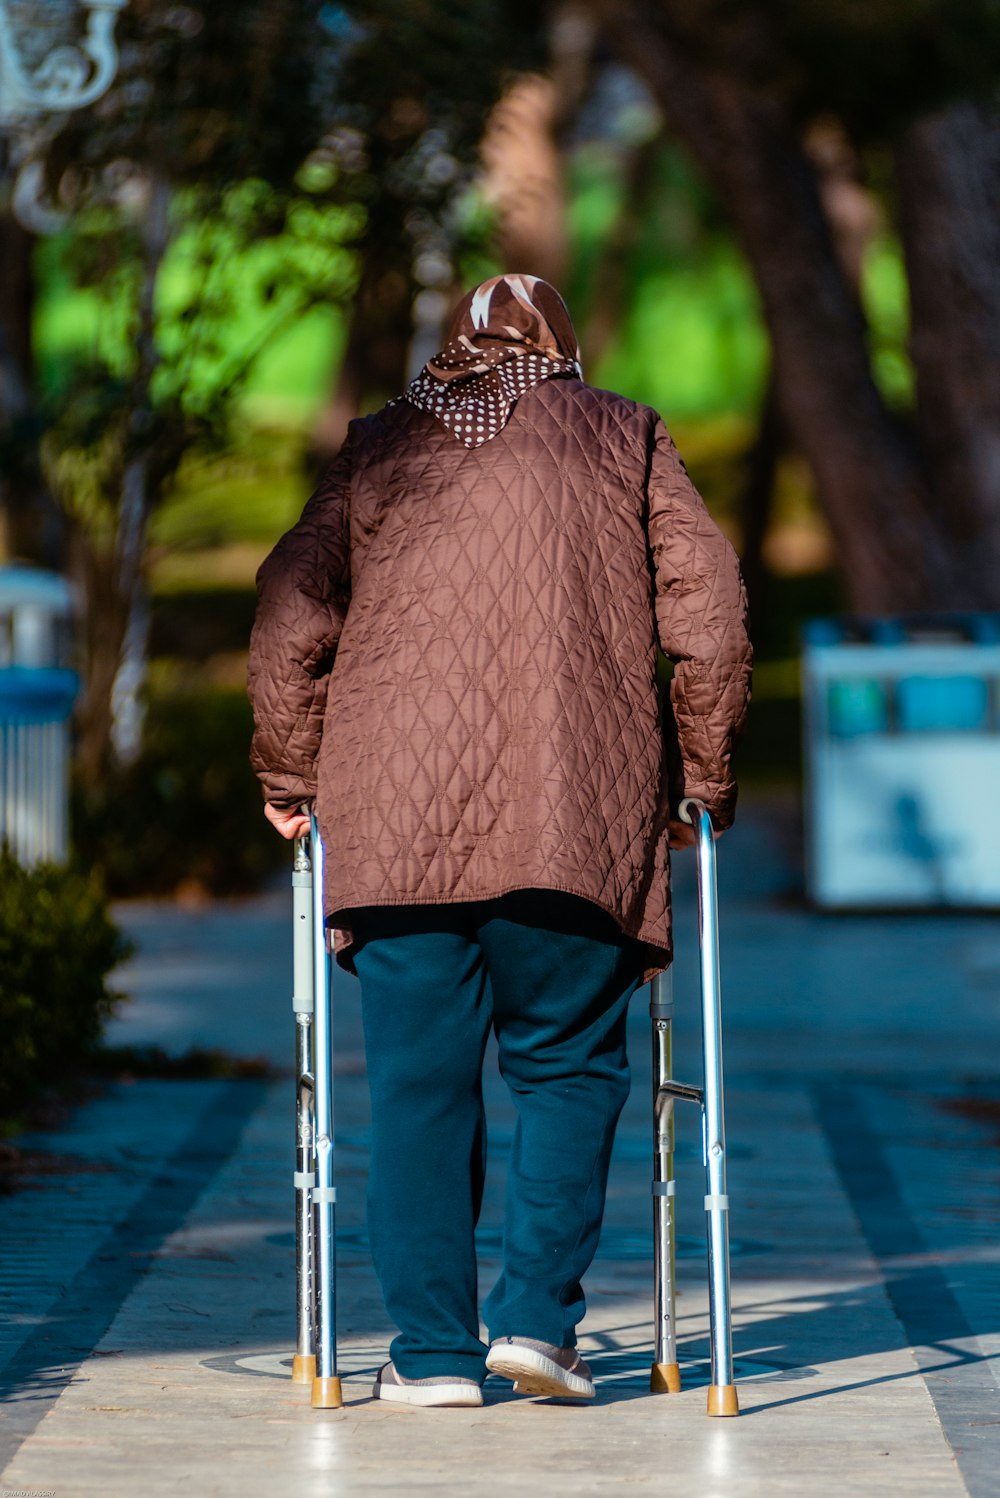 a person with a walker walking down a sidewalk